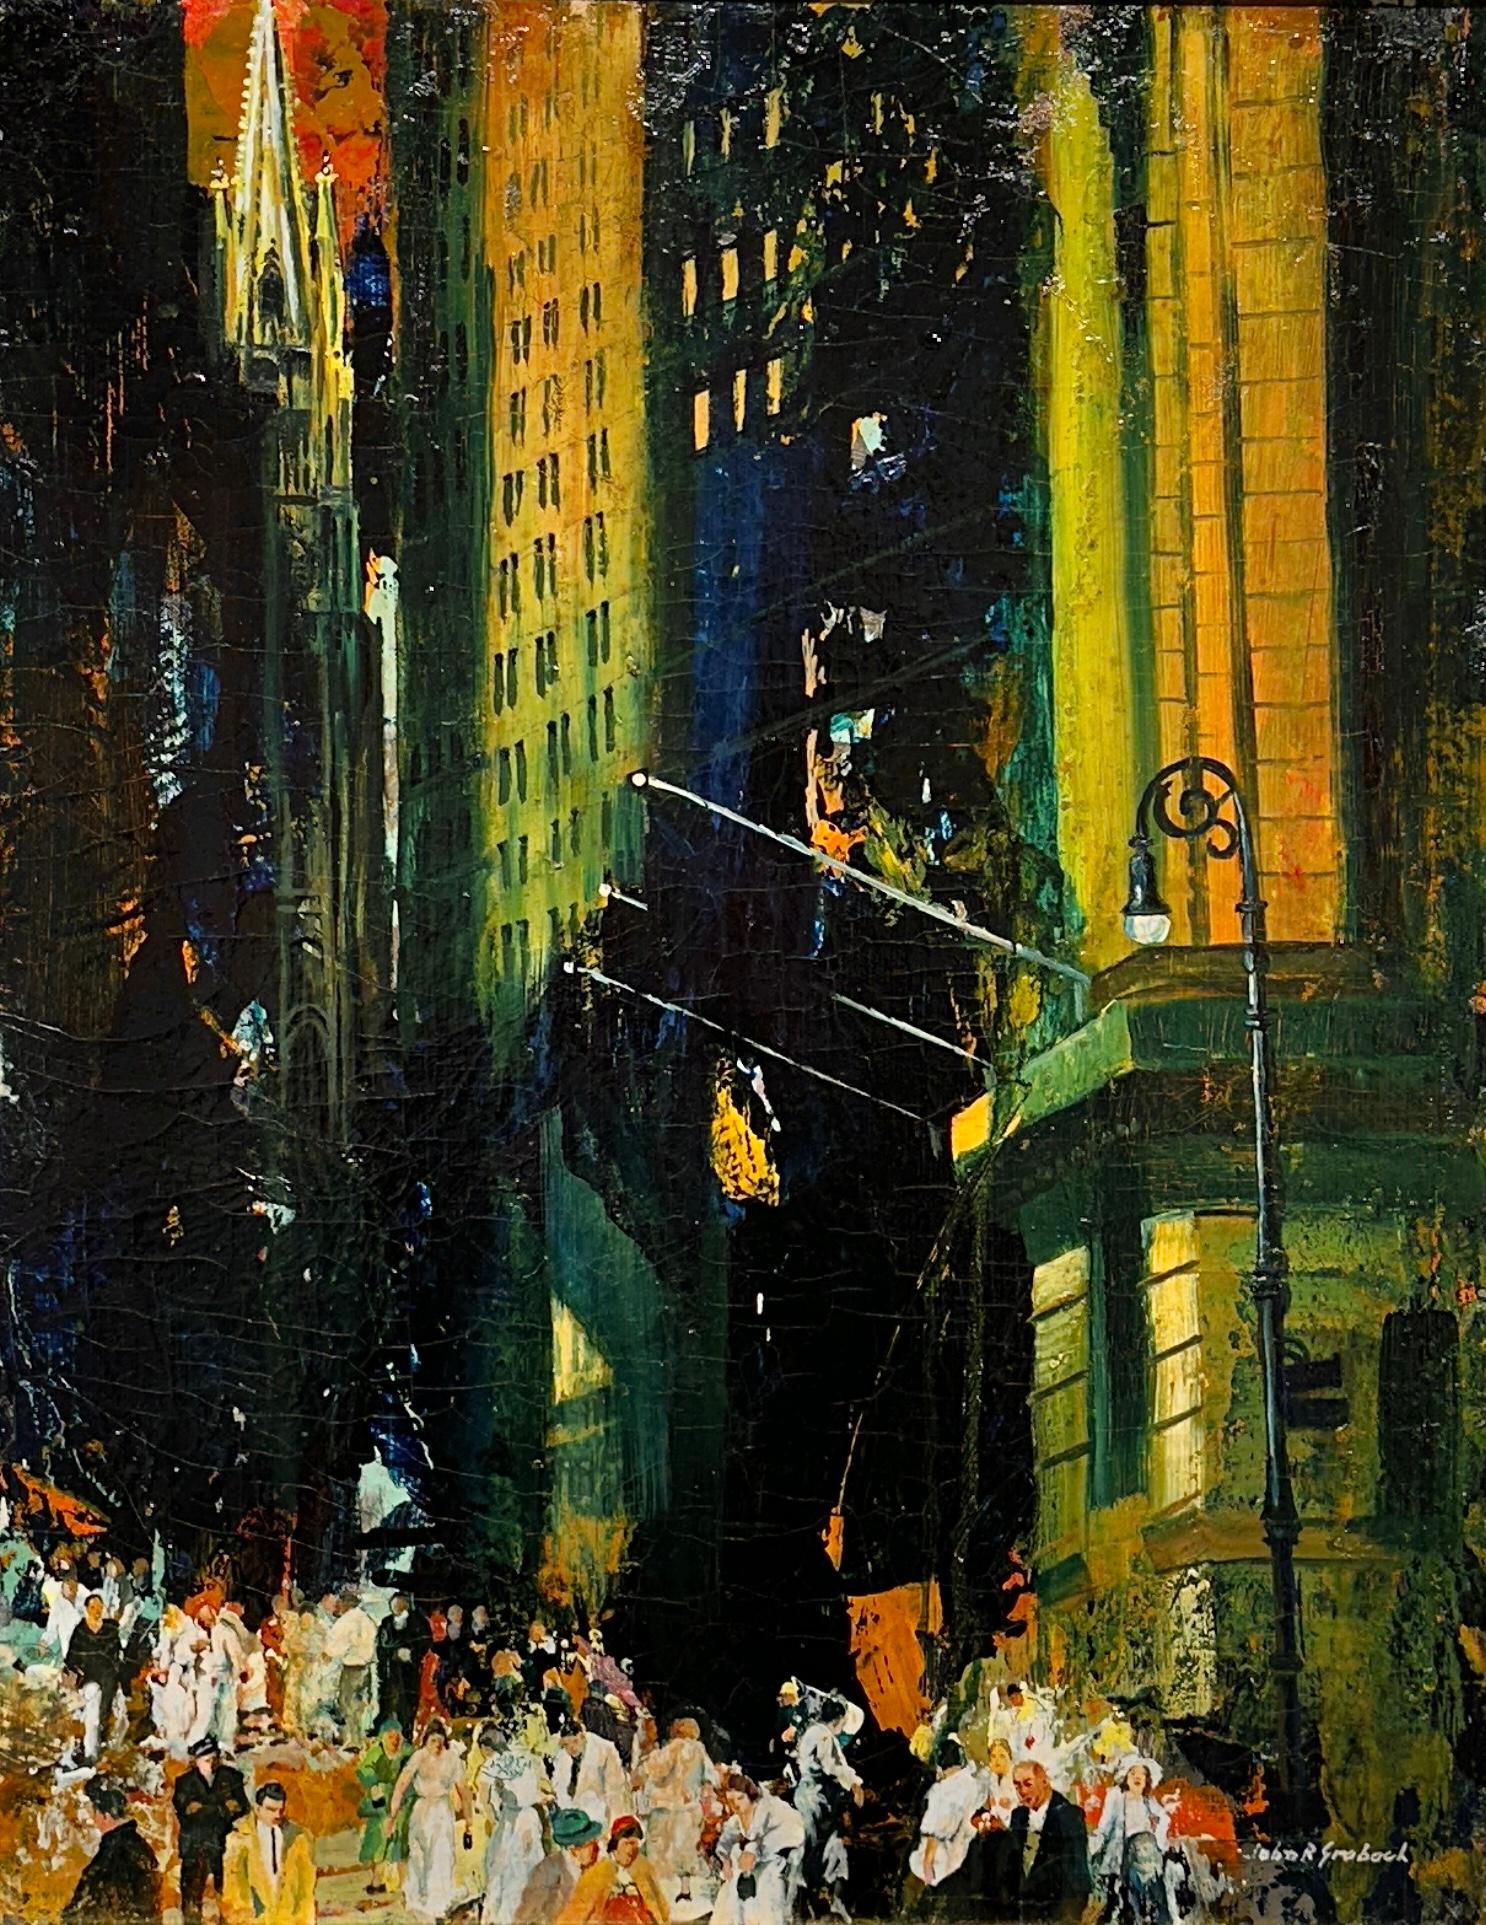 New York scene done by John Grabach Artist "Trinity Church - Wall Street"